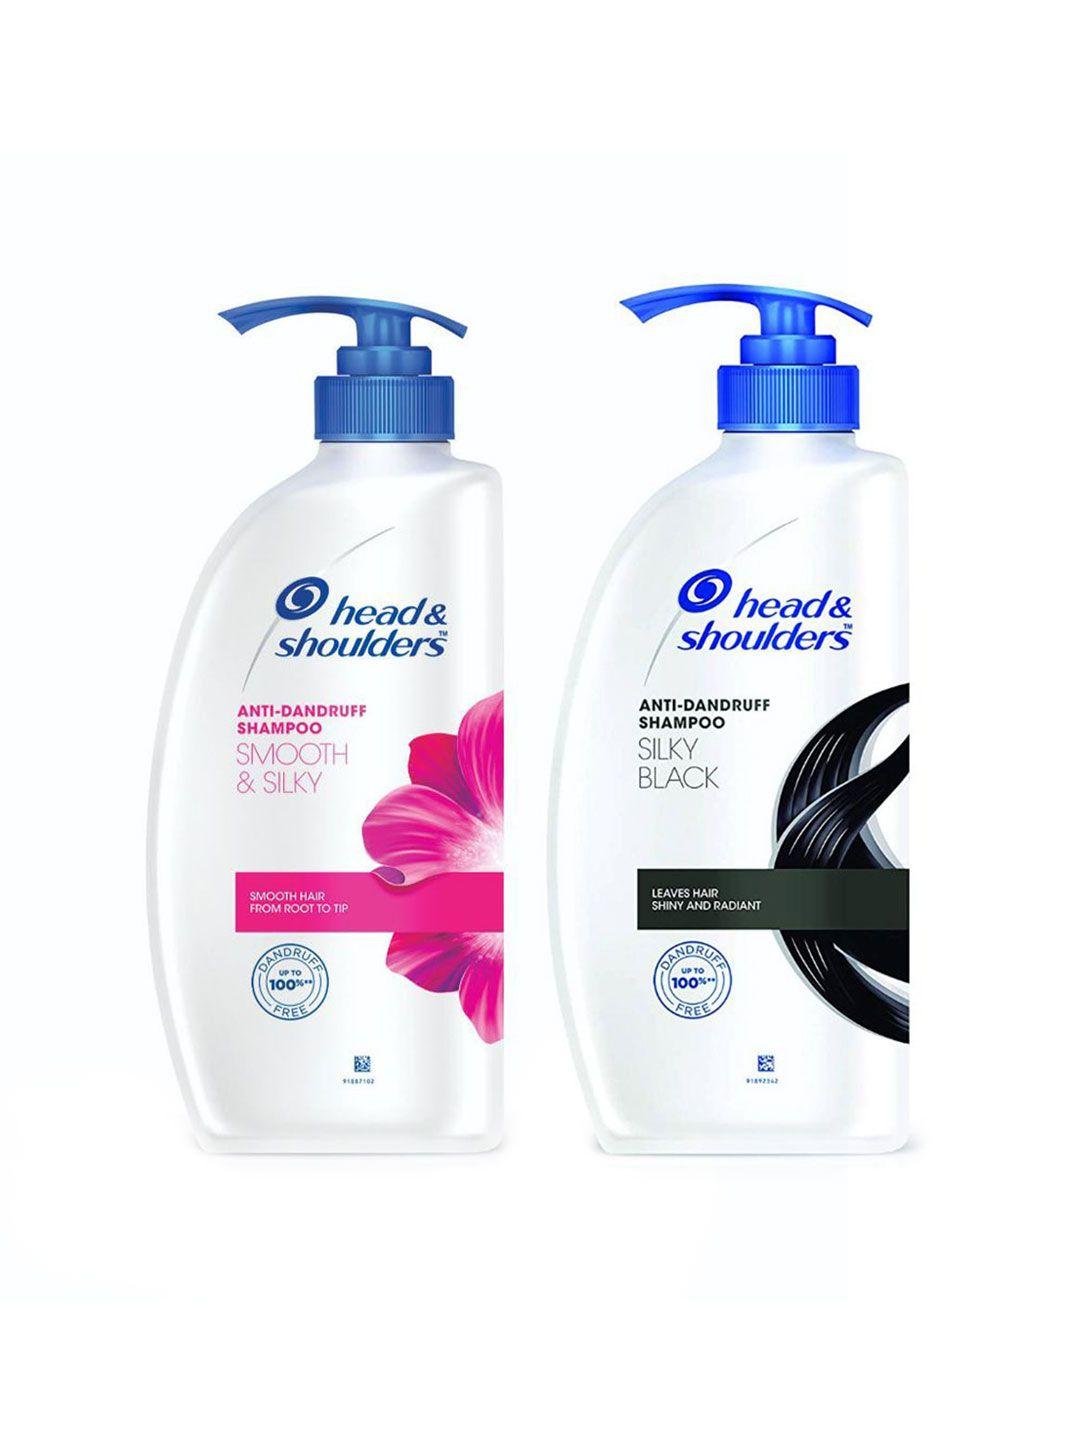 head & shoulders set of 2 anti-dandruff shampoo -silky black & smooth & silky -650 ml each